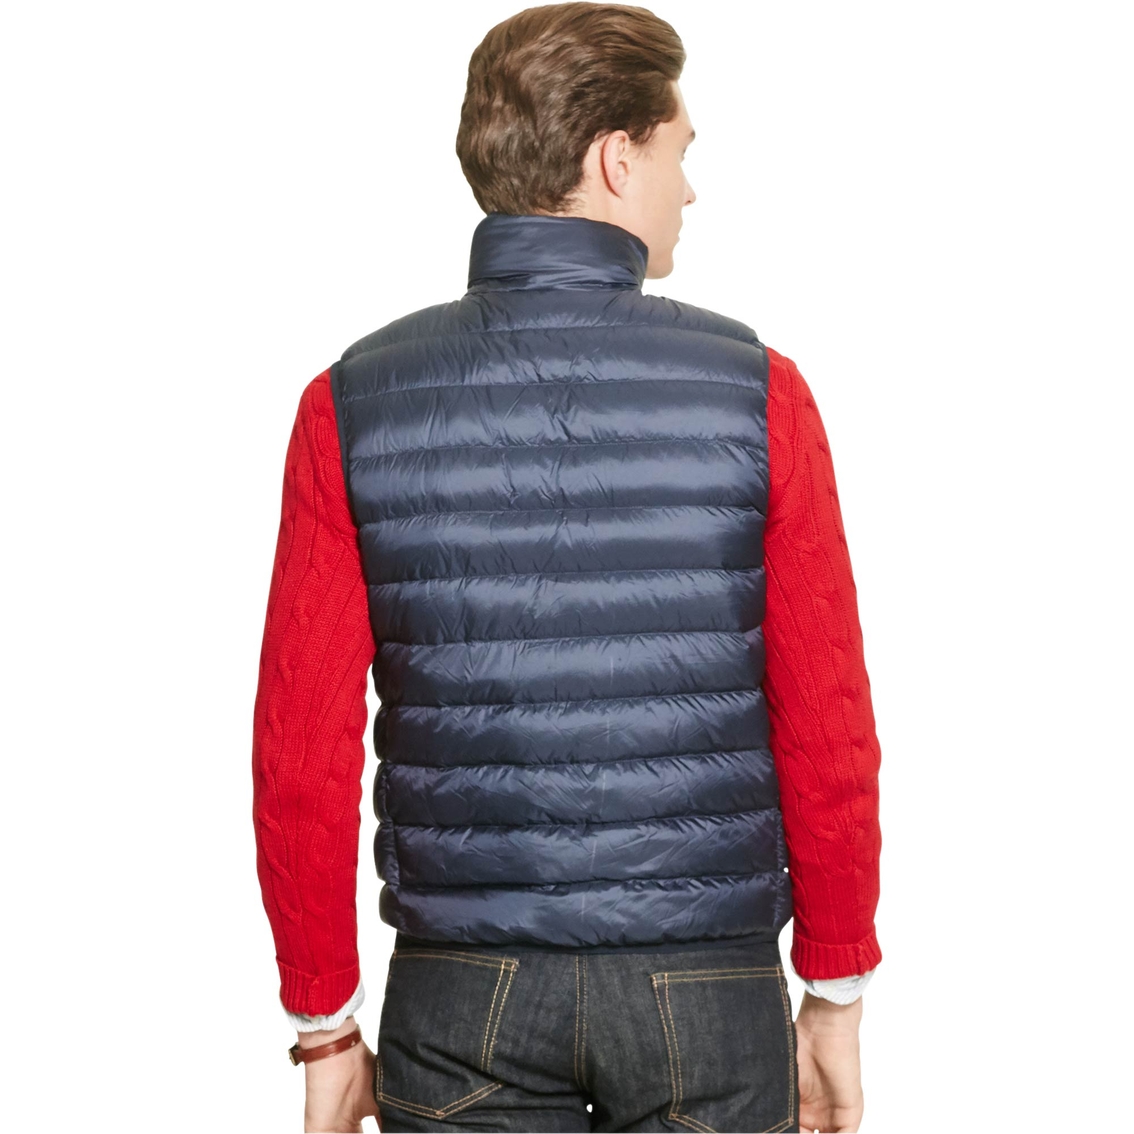 Polo Ralph Lauren Packable Down Vest - Image 2 of 4